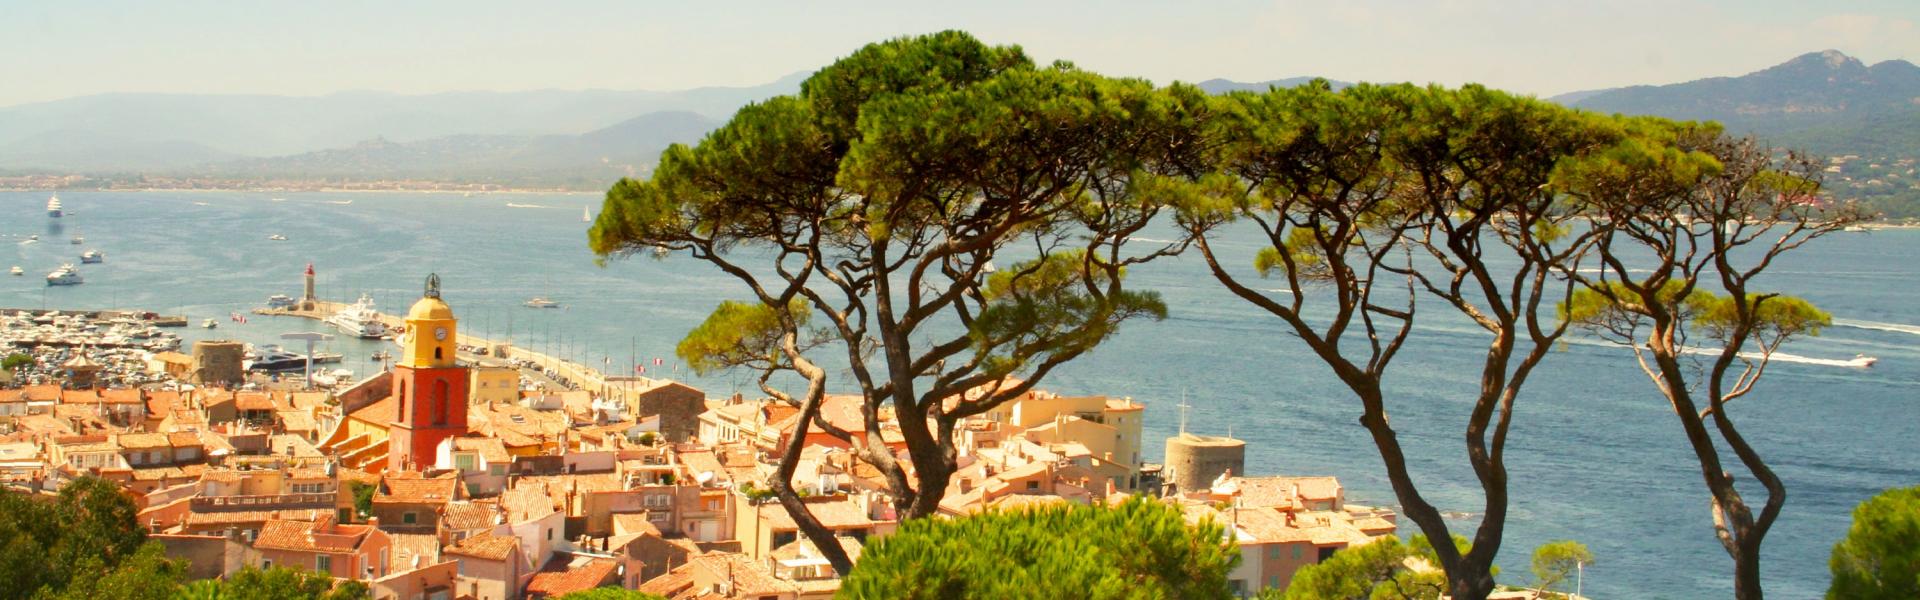 Case vacanze e appartamenti a Saint-Tropez in affitto - CaseVacanza.it